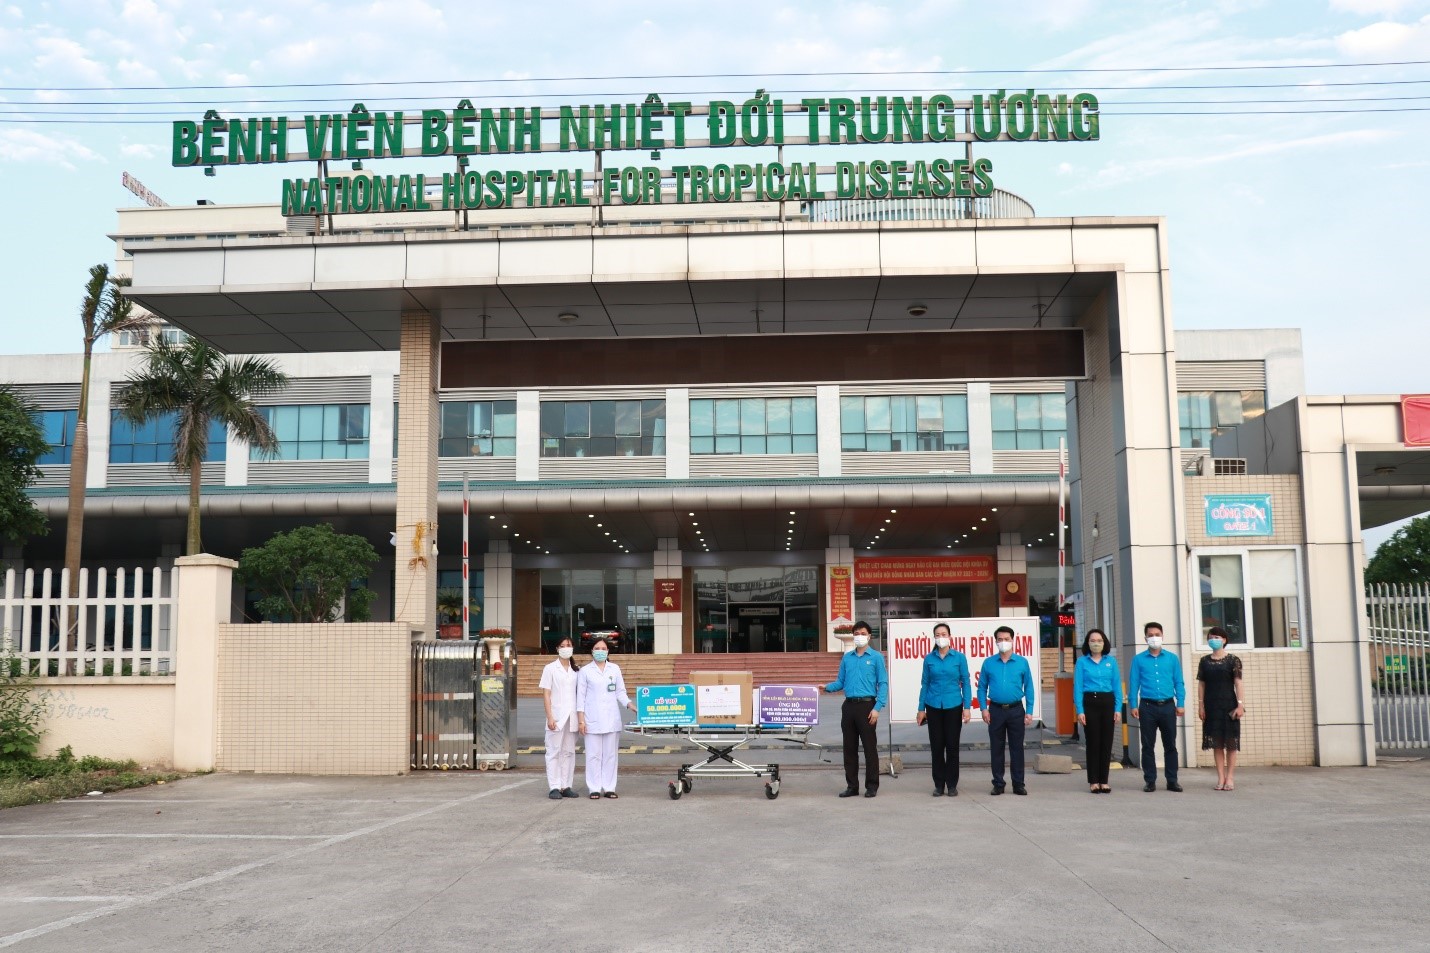 Central Tropical Disease Hospital